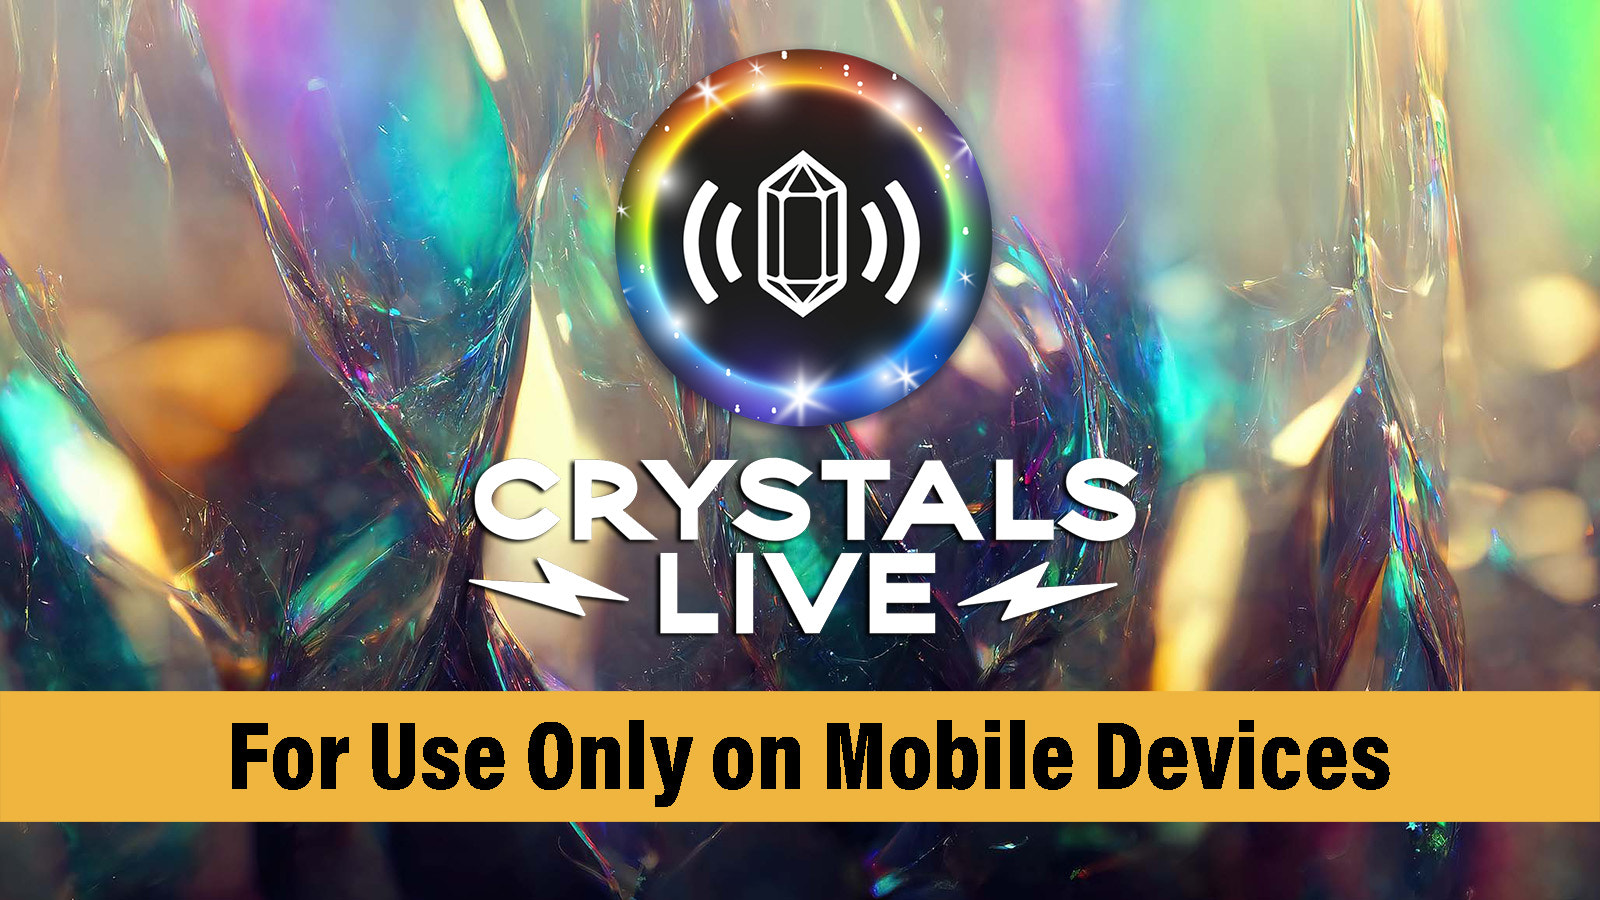 Crystals Live är en mobil endast app